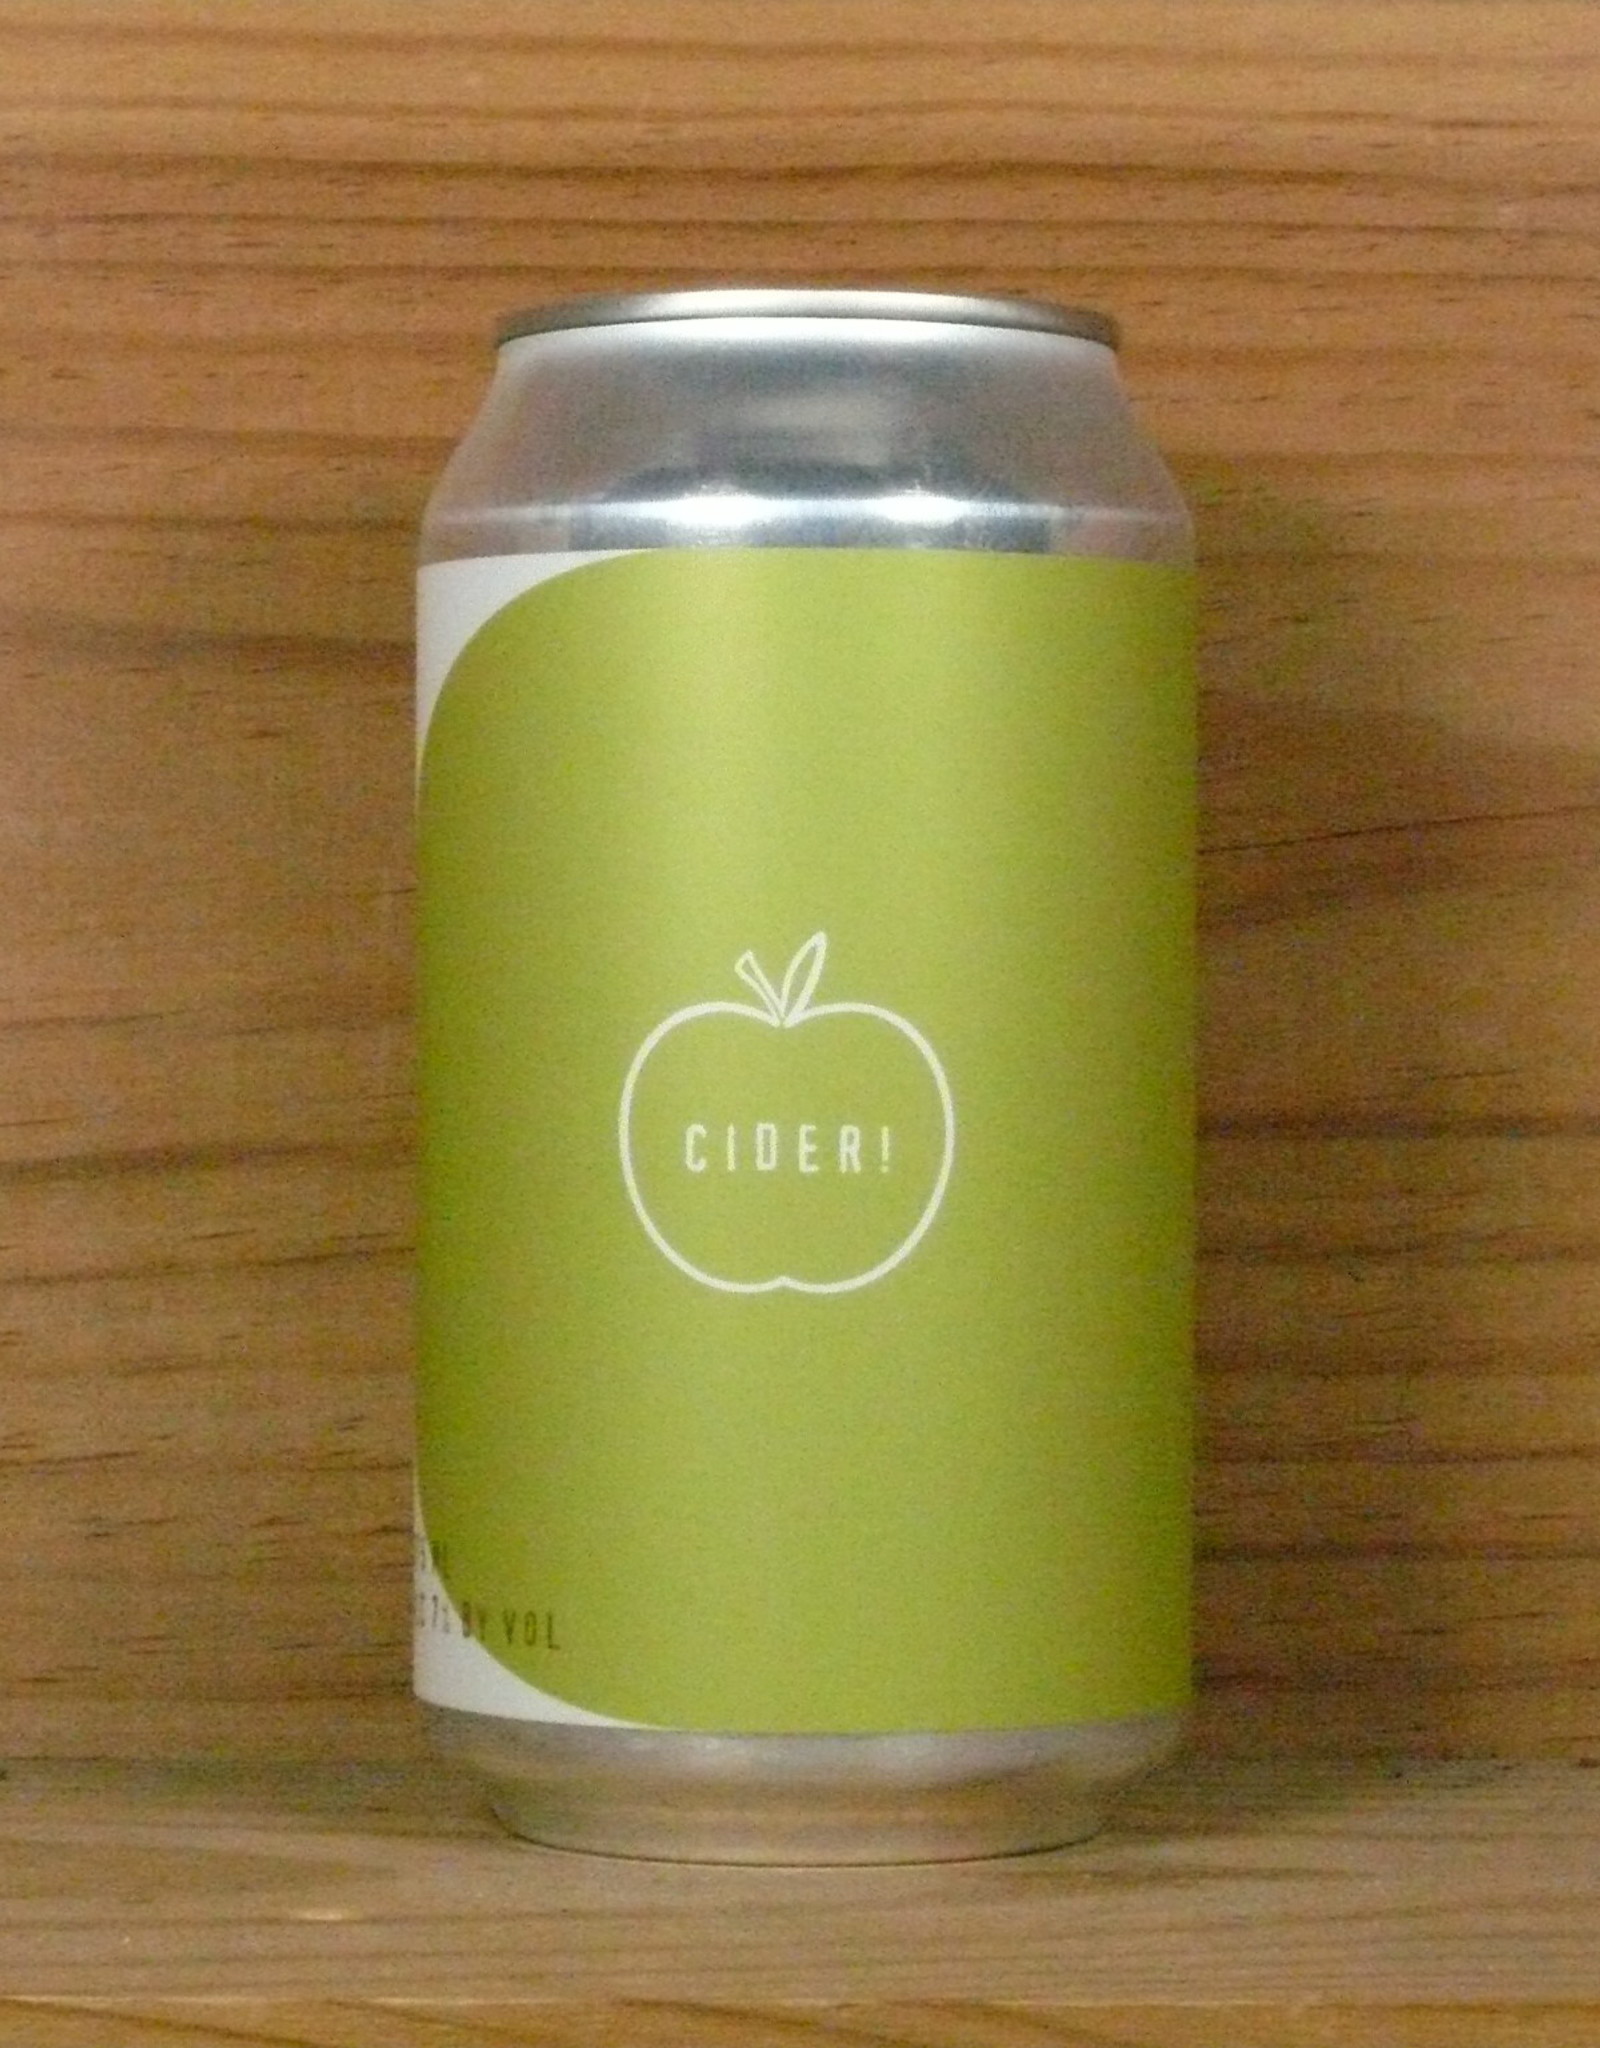 Wild Arc Farm “Northern Spy + Callery Pear" Cider - 375ml can